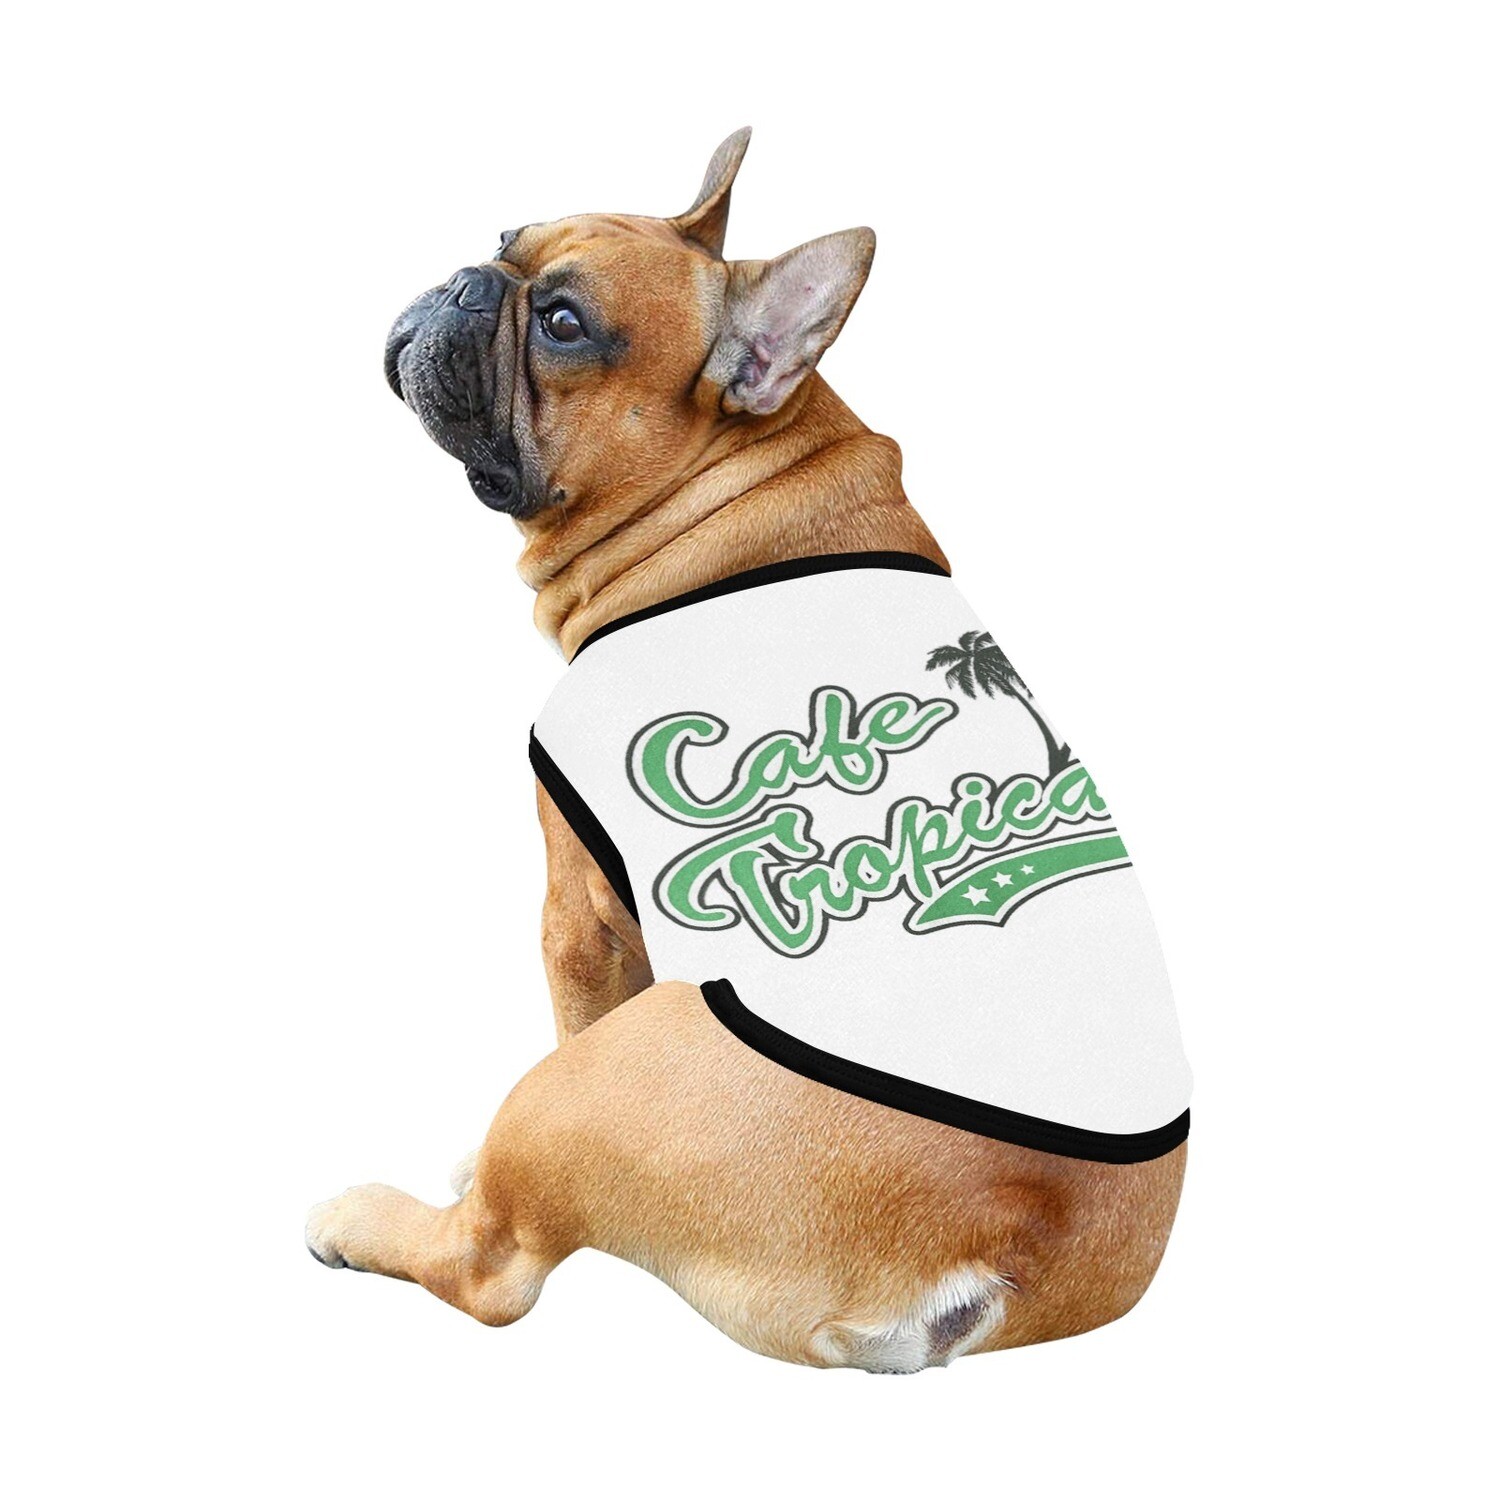 🐕 David Rose baseball championship cafe tropical Dog t-shirt, Dog Tank Top, Dog shirt, Dog clothes, Gifts, front back print, 7 sizes XS to 3XL, Schitt's Creek, TV series